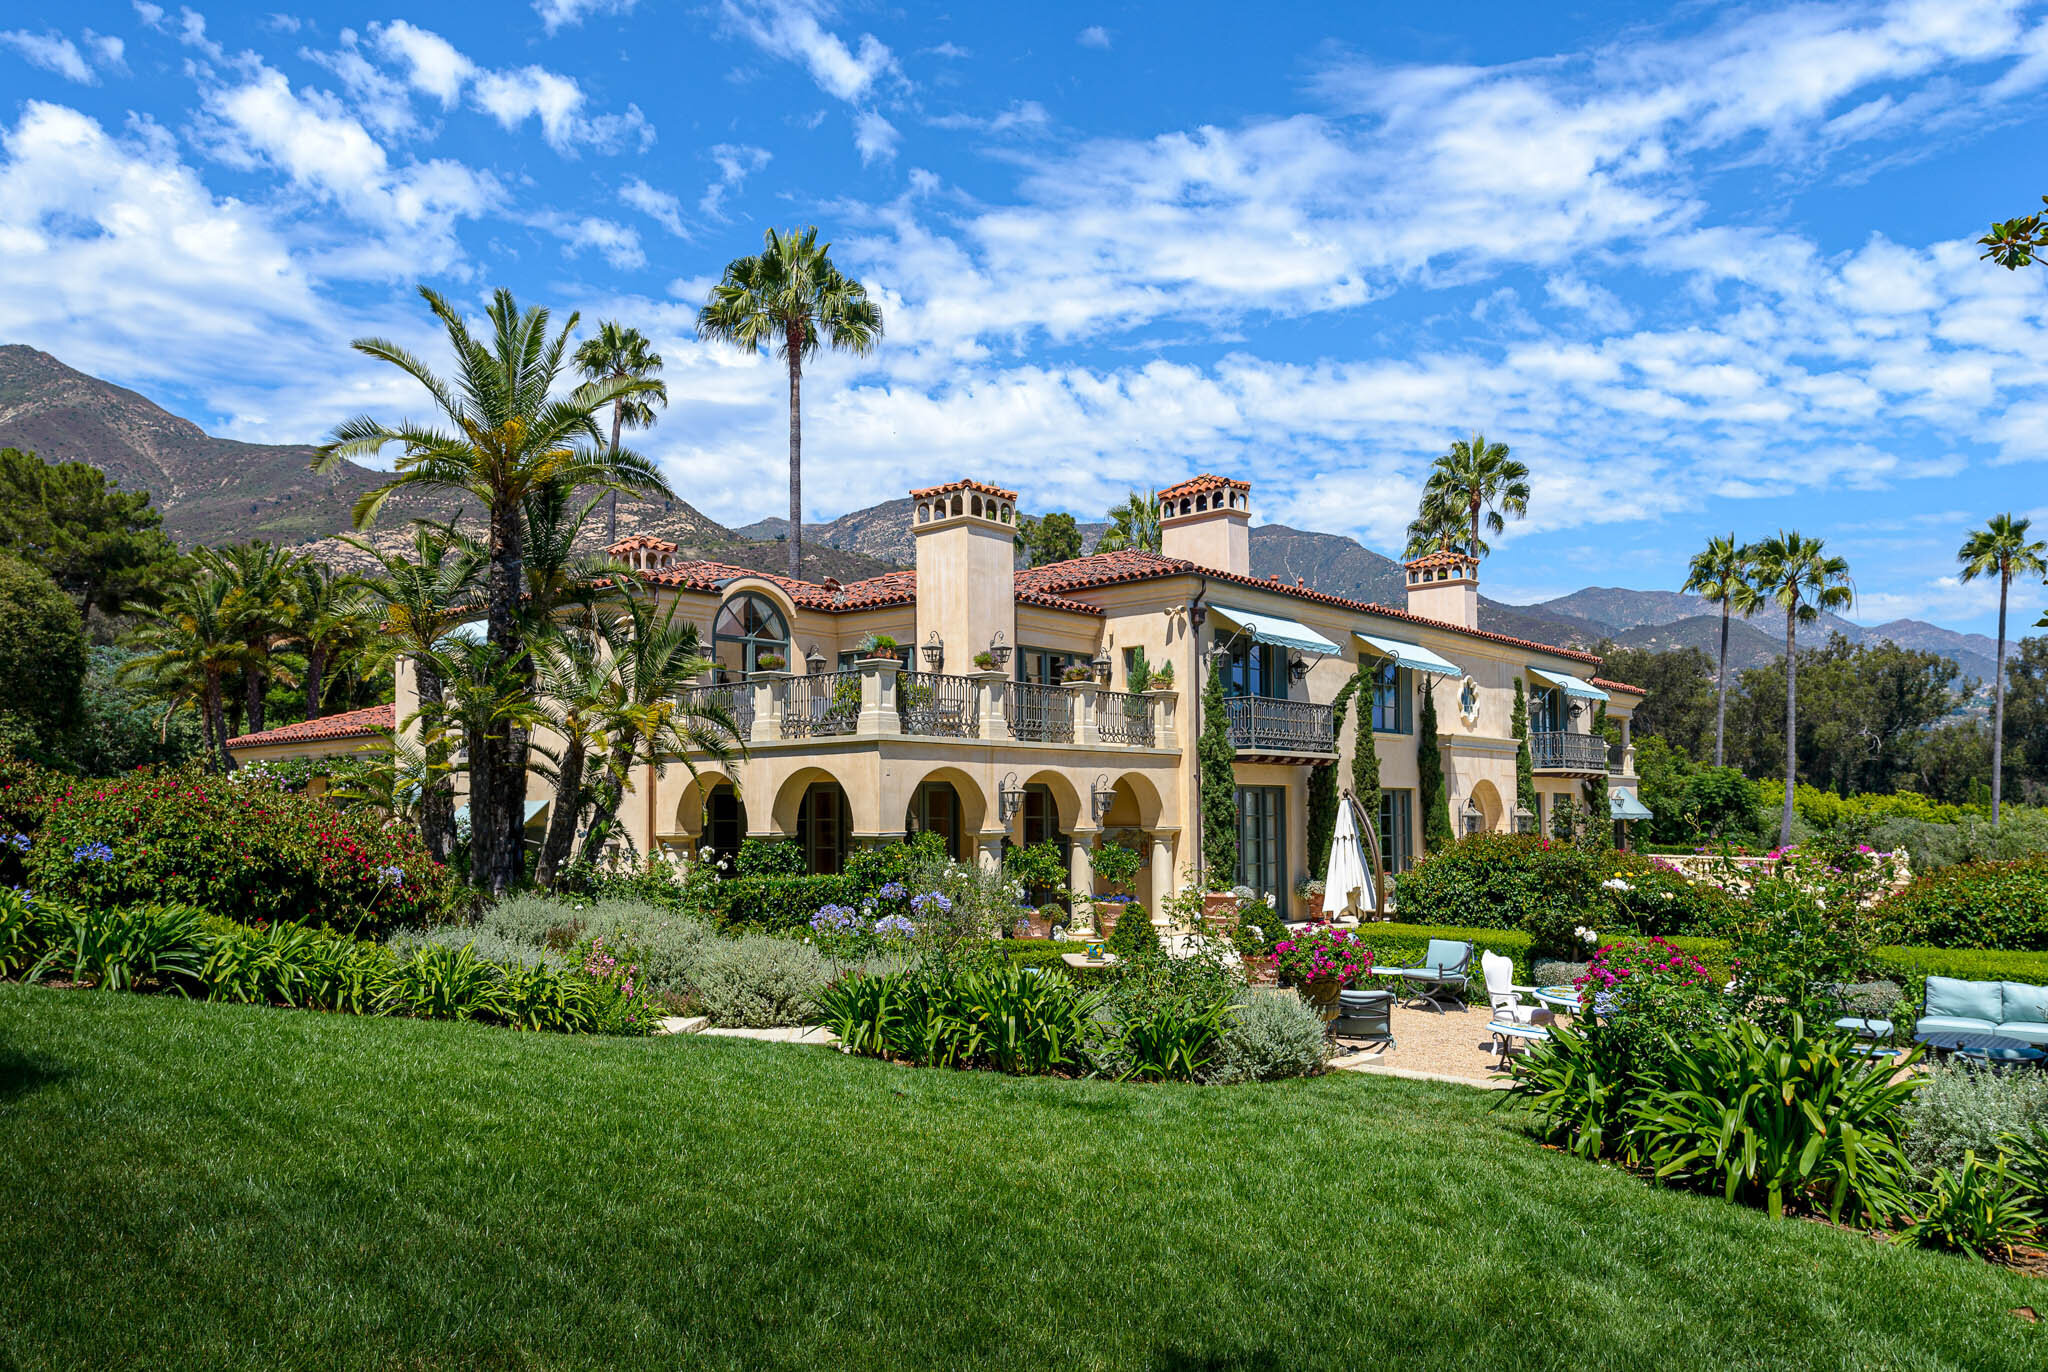 Francis York Casa Leo Linda, a Montecito Mediterranean Mansion15.jpg